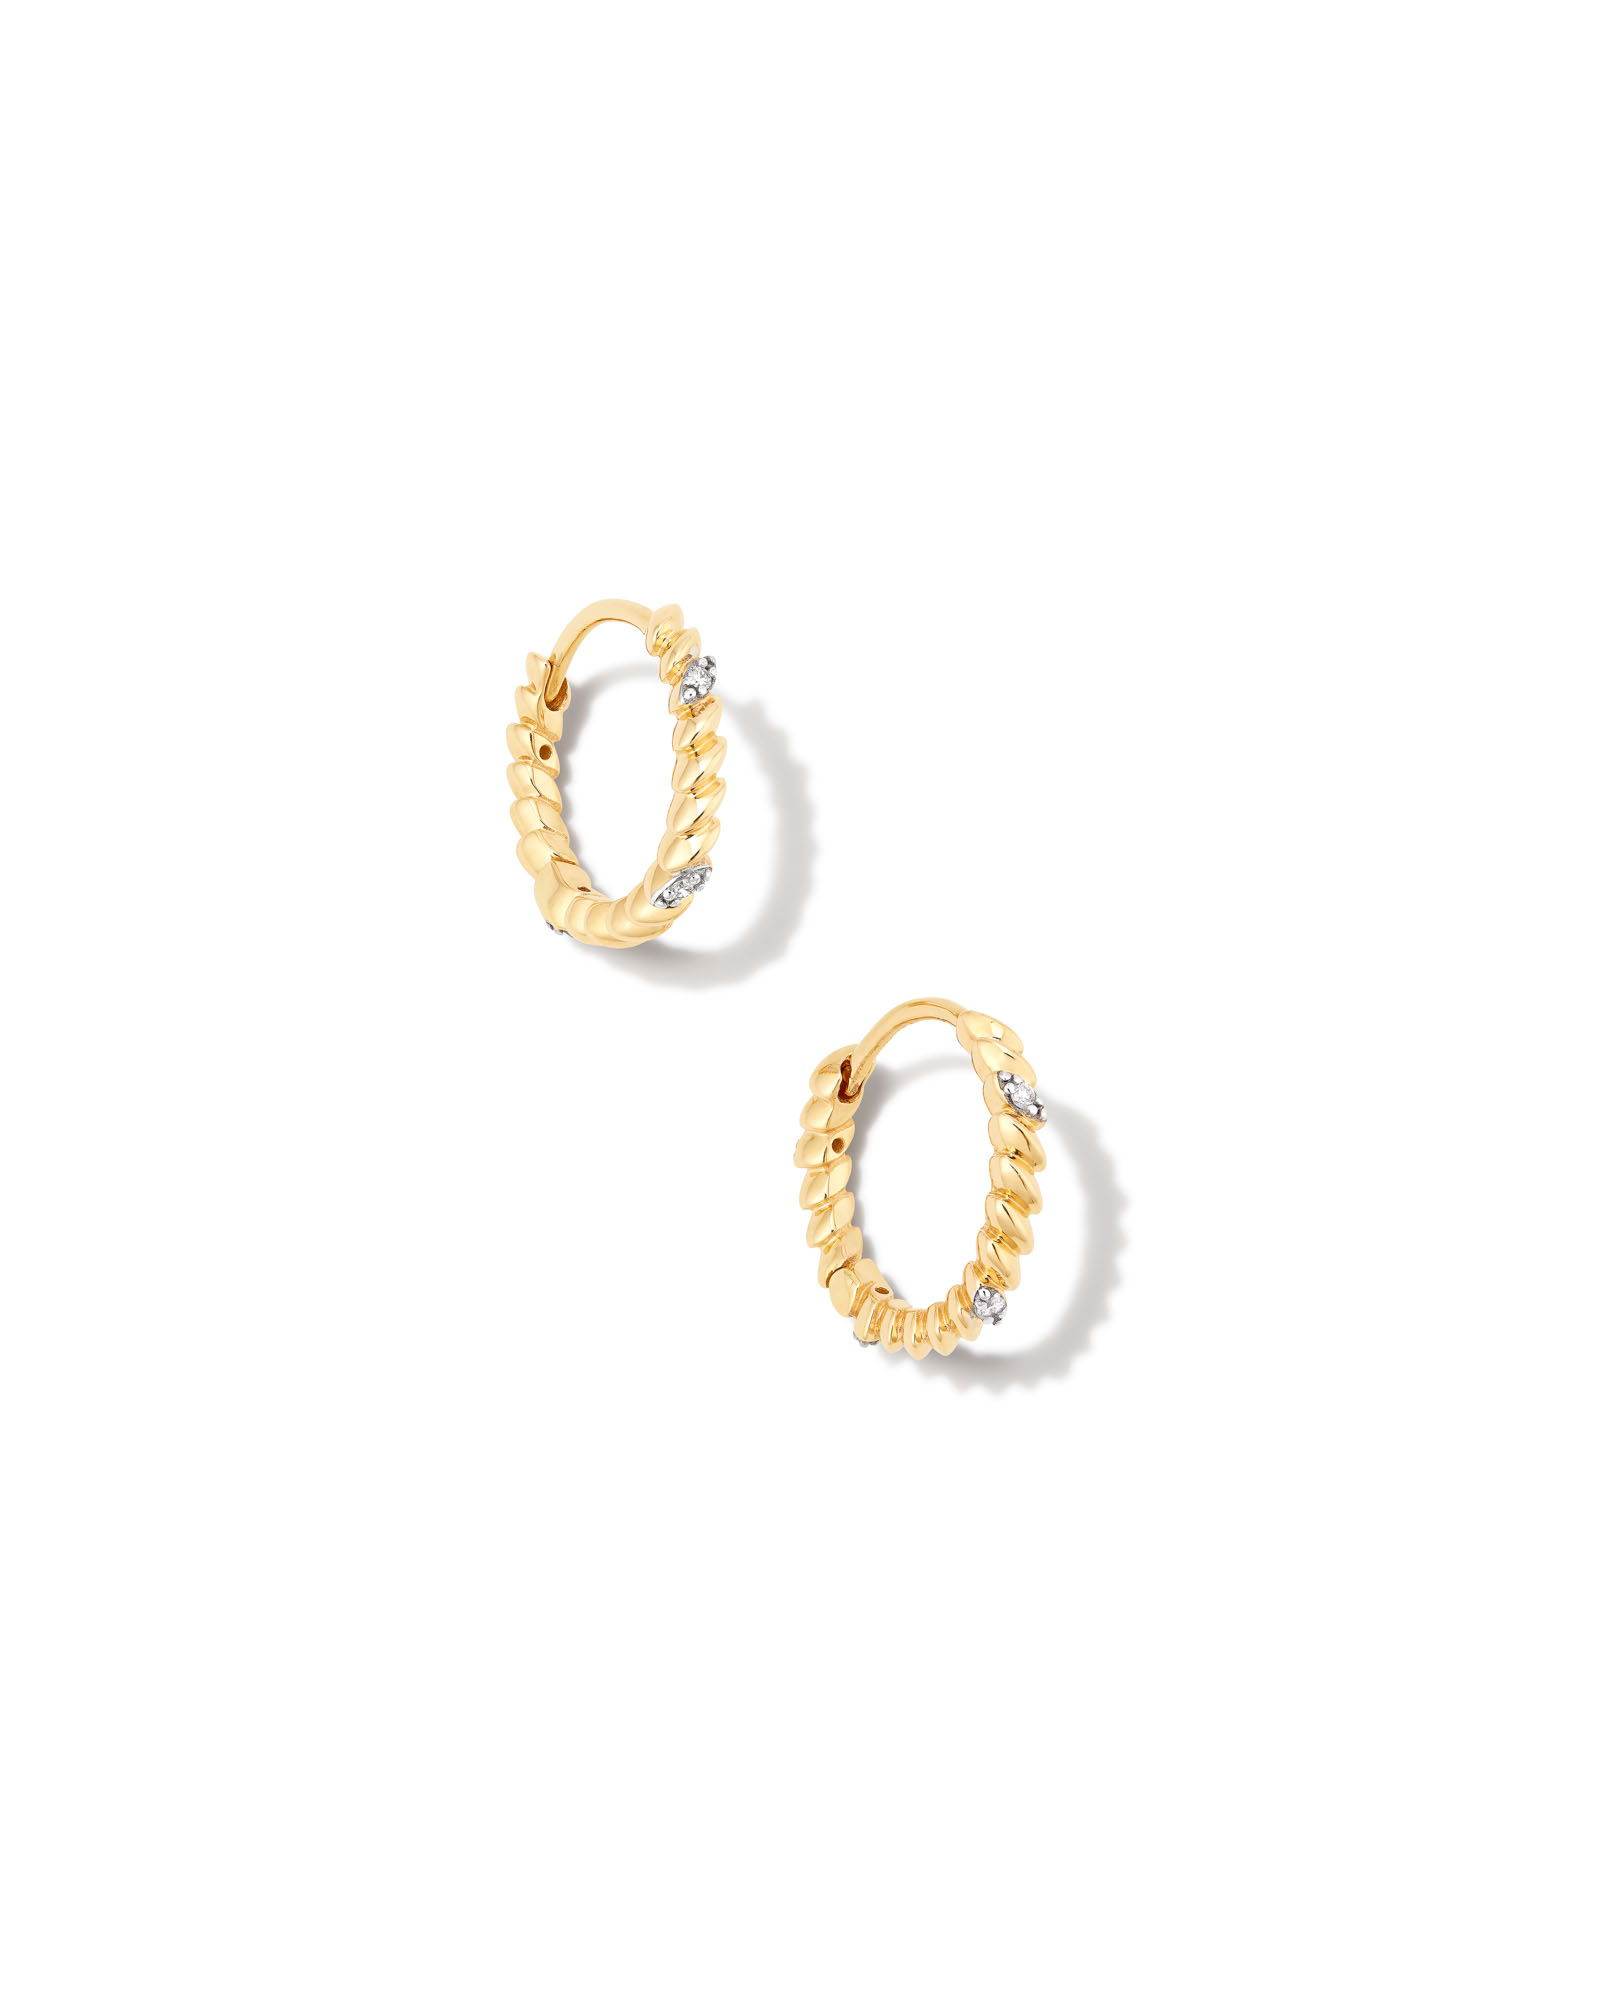 Tyler 14k Yellow Gold Huggie Earrings in White Diamond | Kendra Scott